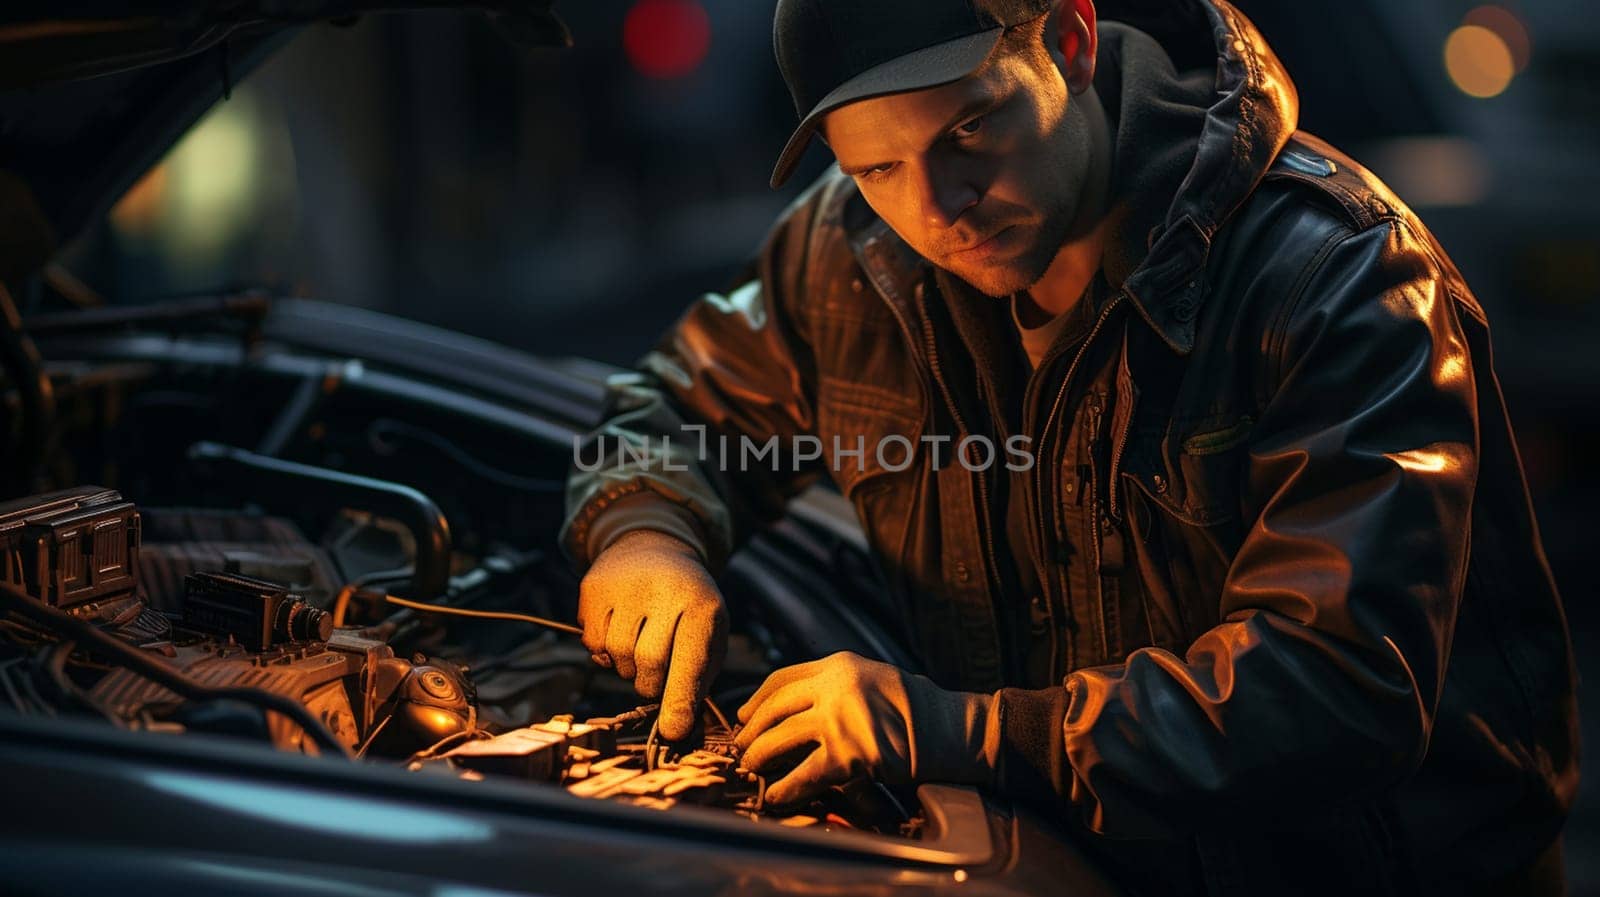 repairman mechanic at car repairing work using a tool. High quality photo